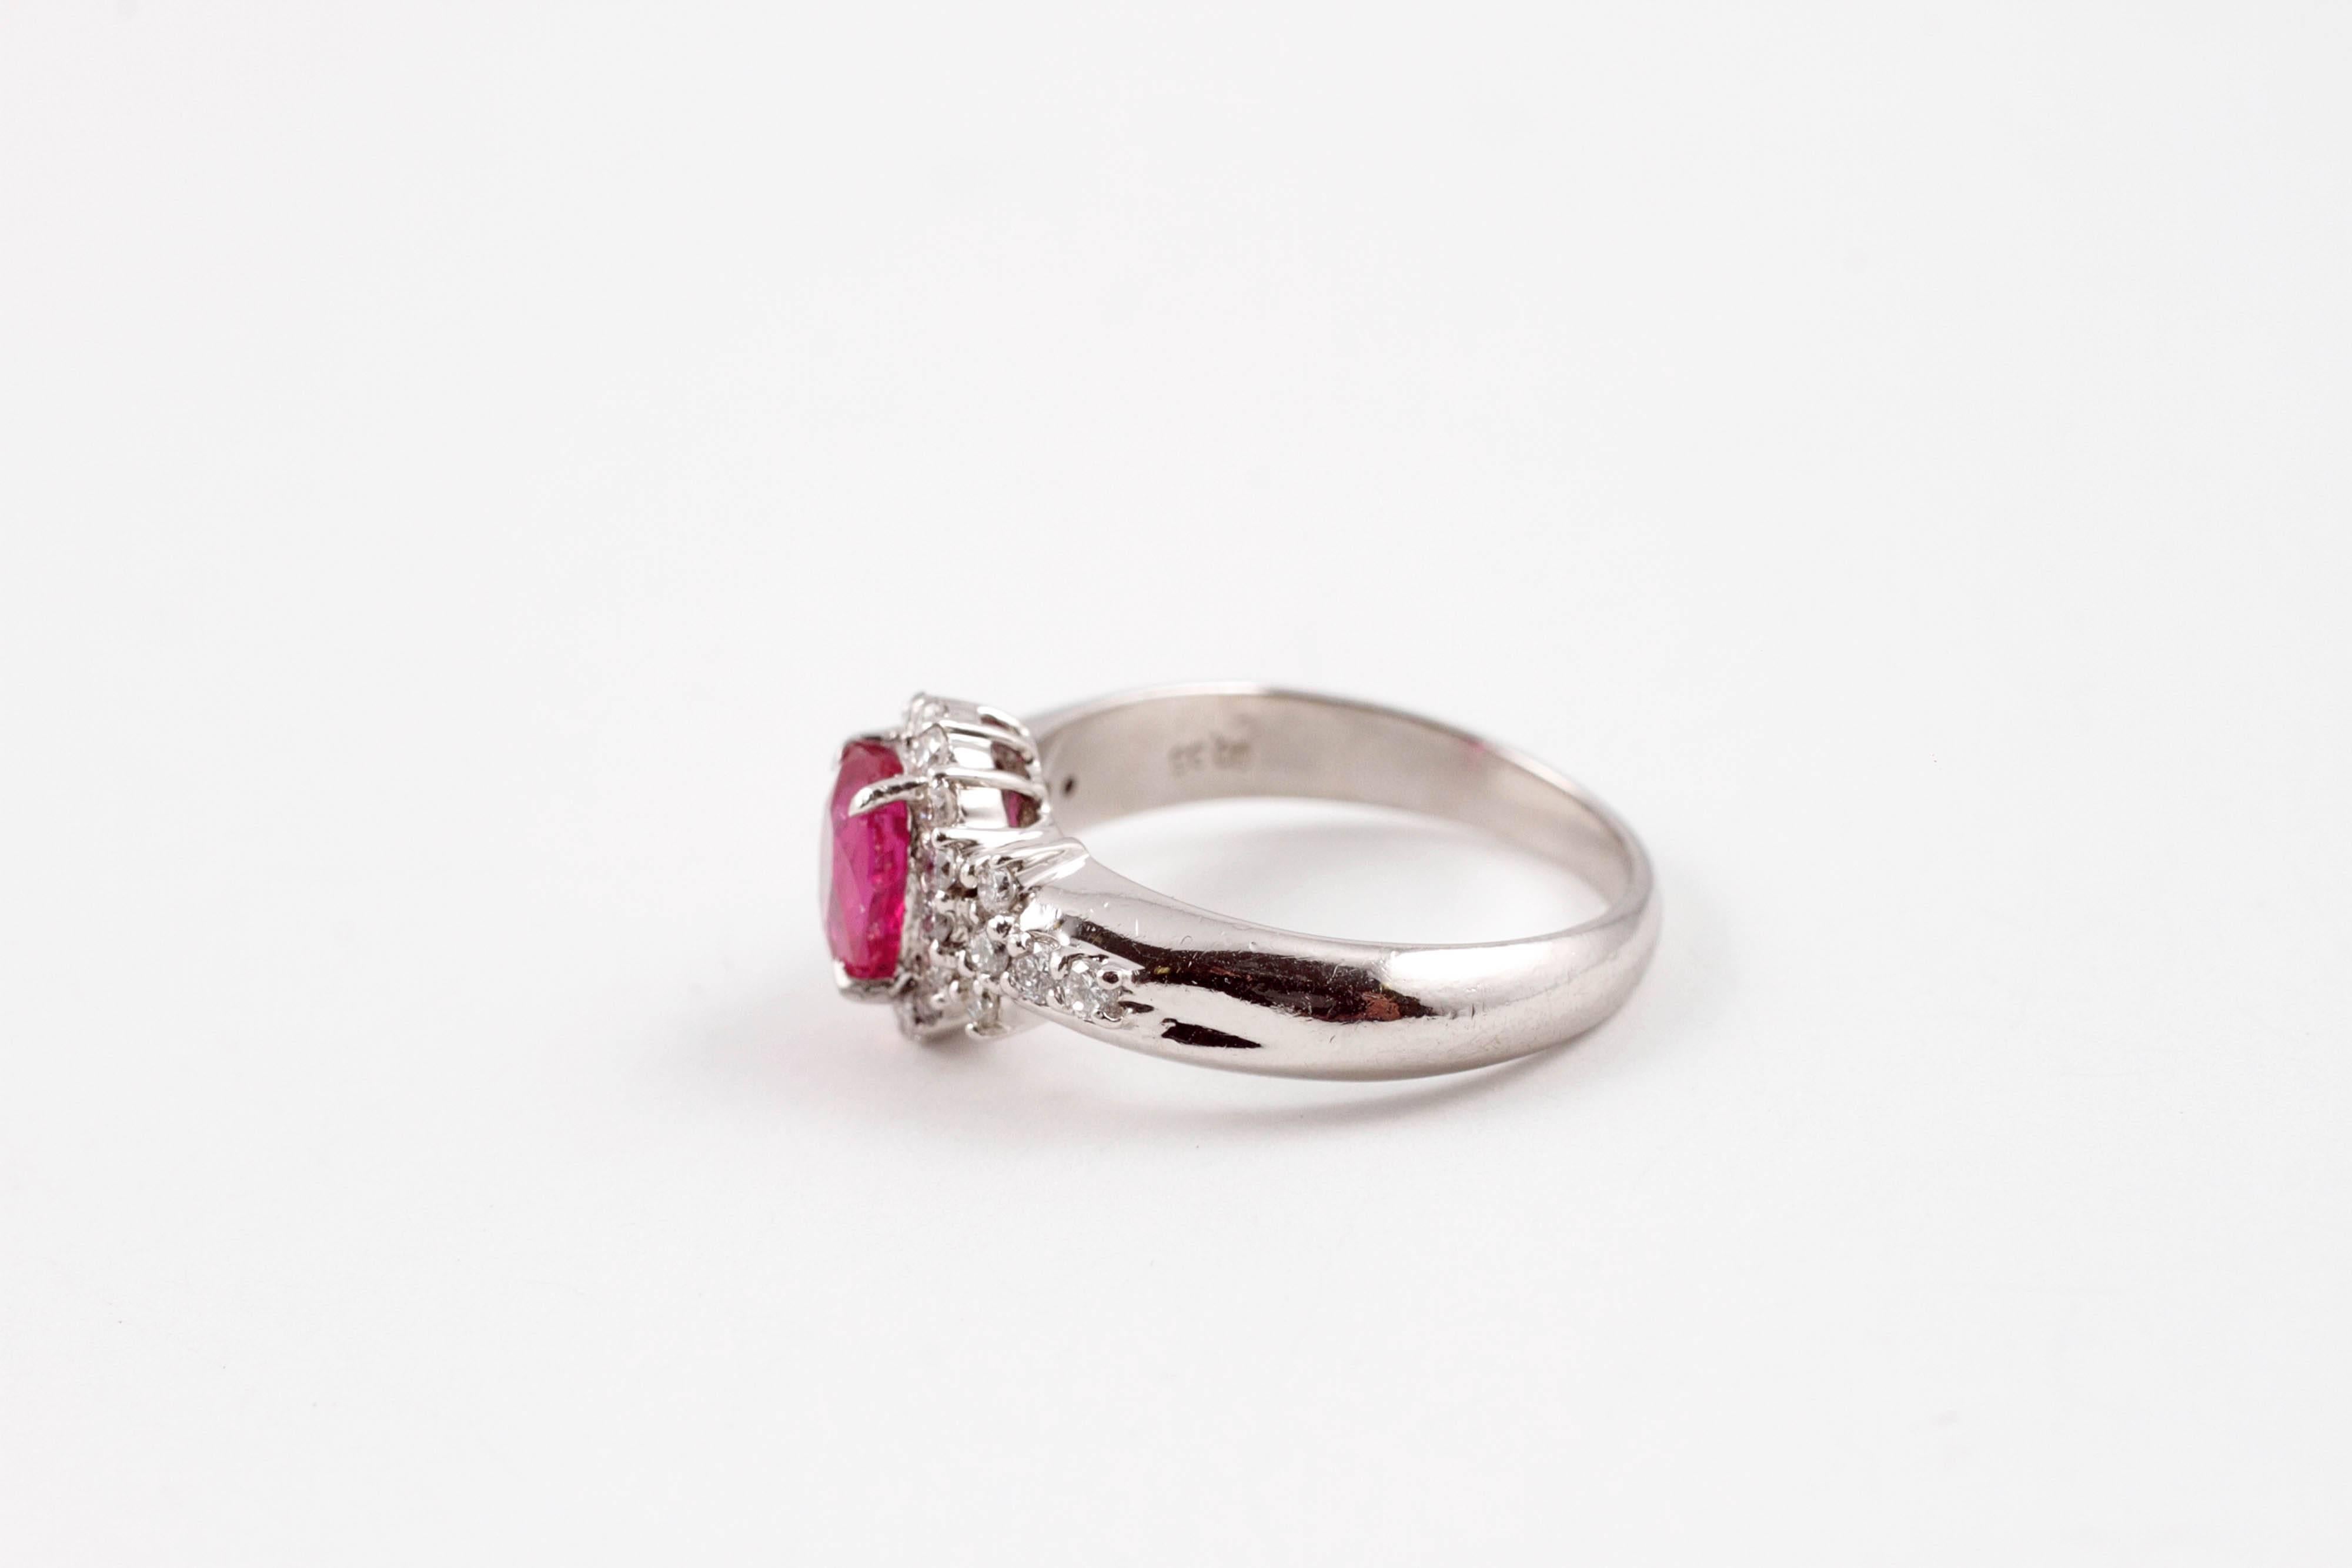 Oval Cut 1.15 Carat Burma Ruby Diamond Ring in Platinum For Sale